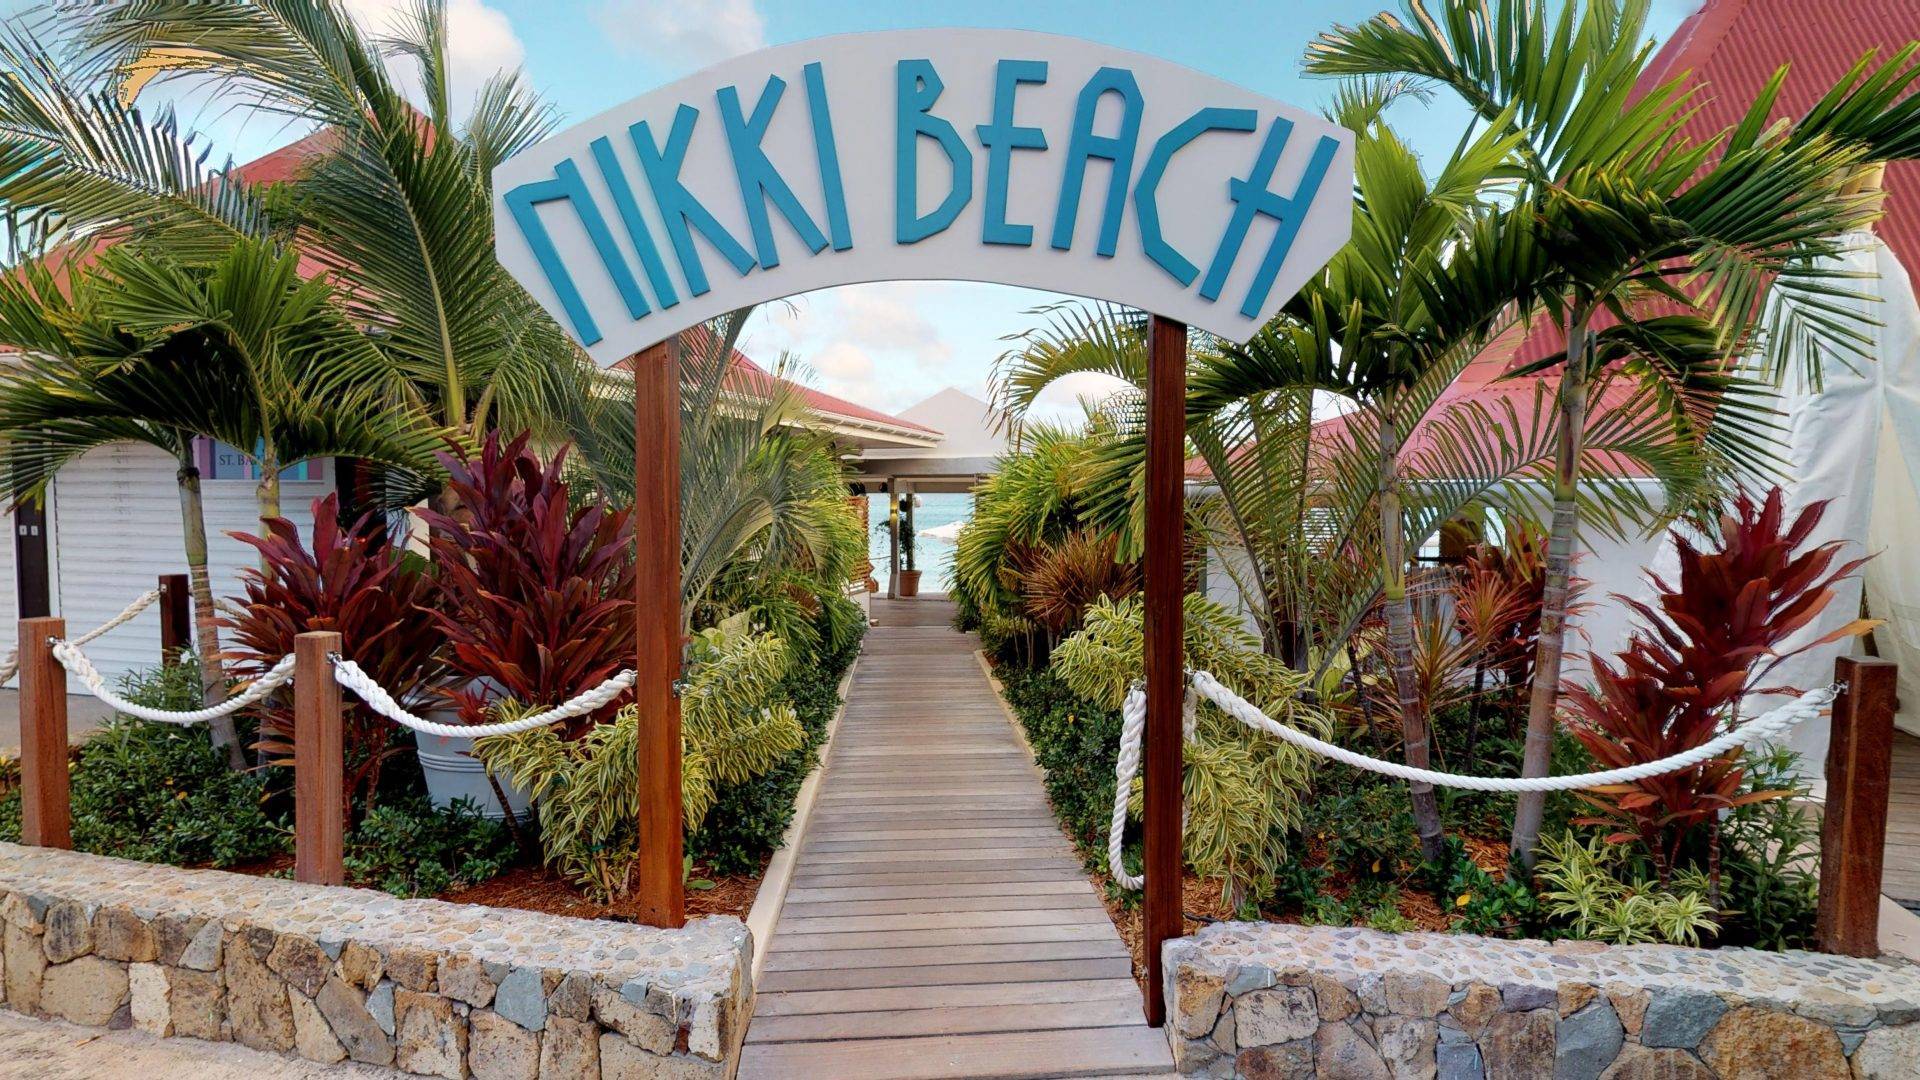 Nikki-Beach-St-Barth-FWI-12132019_175003-1-2.jpg